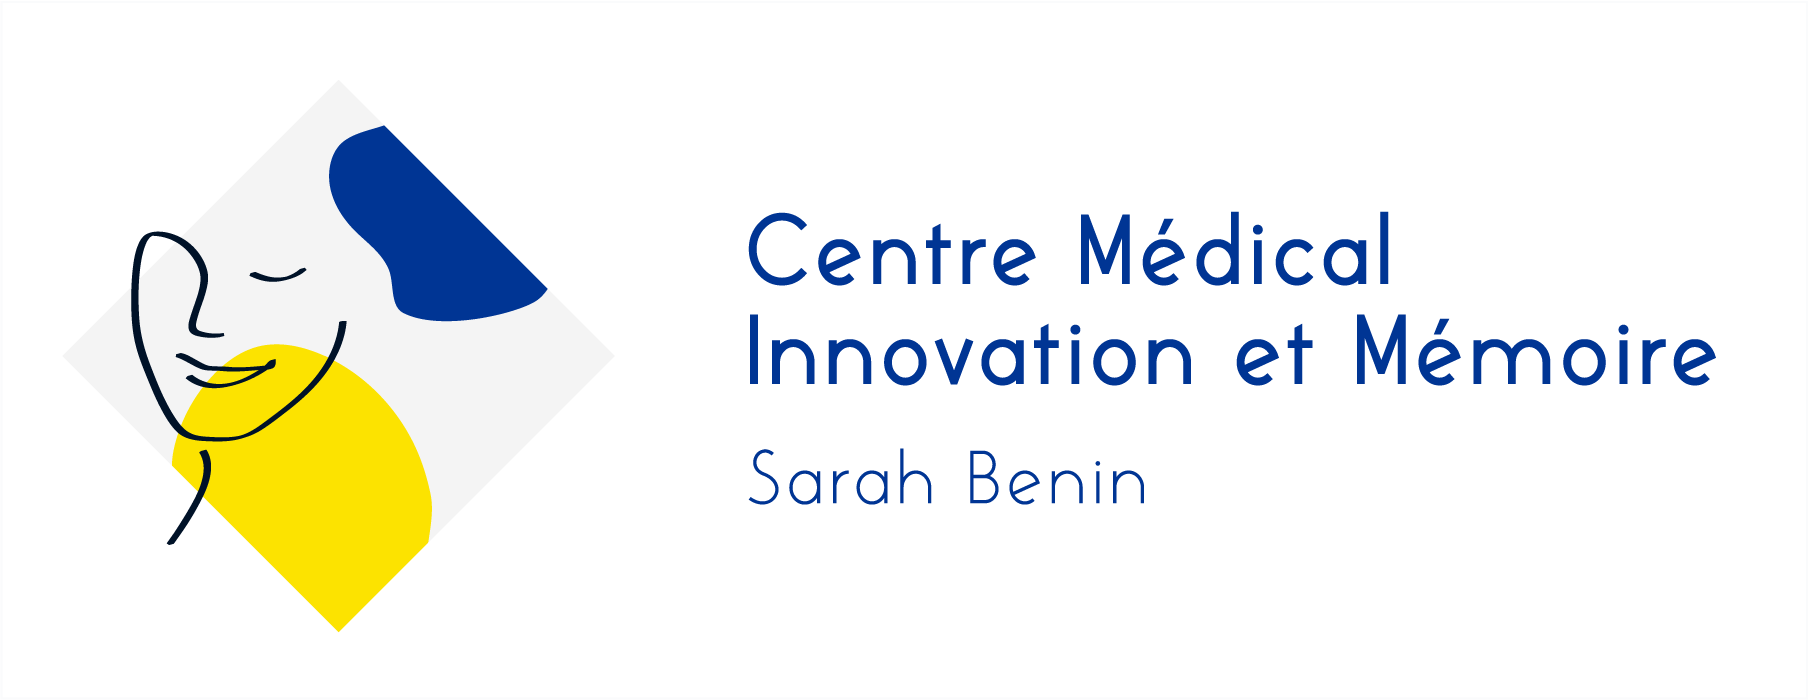 Centre Médical Innovation et Mémoire - Sarah Benin